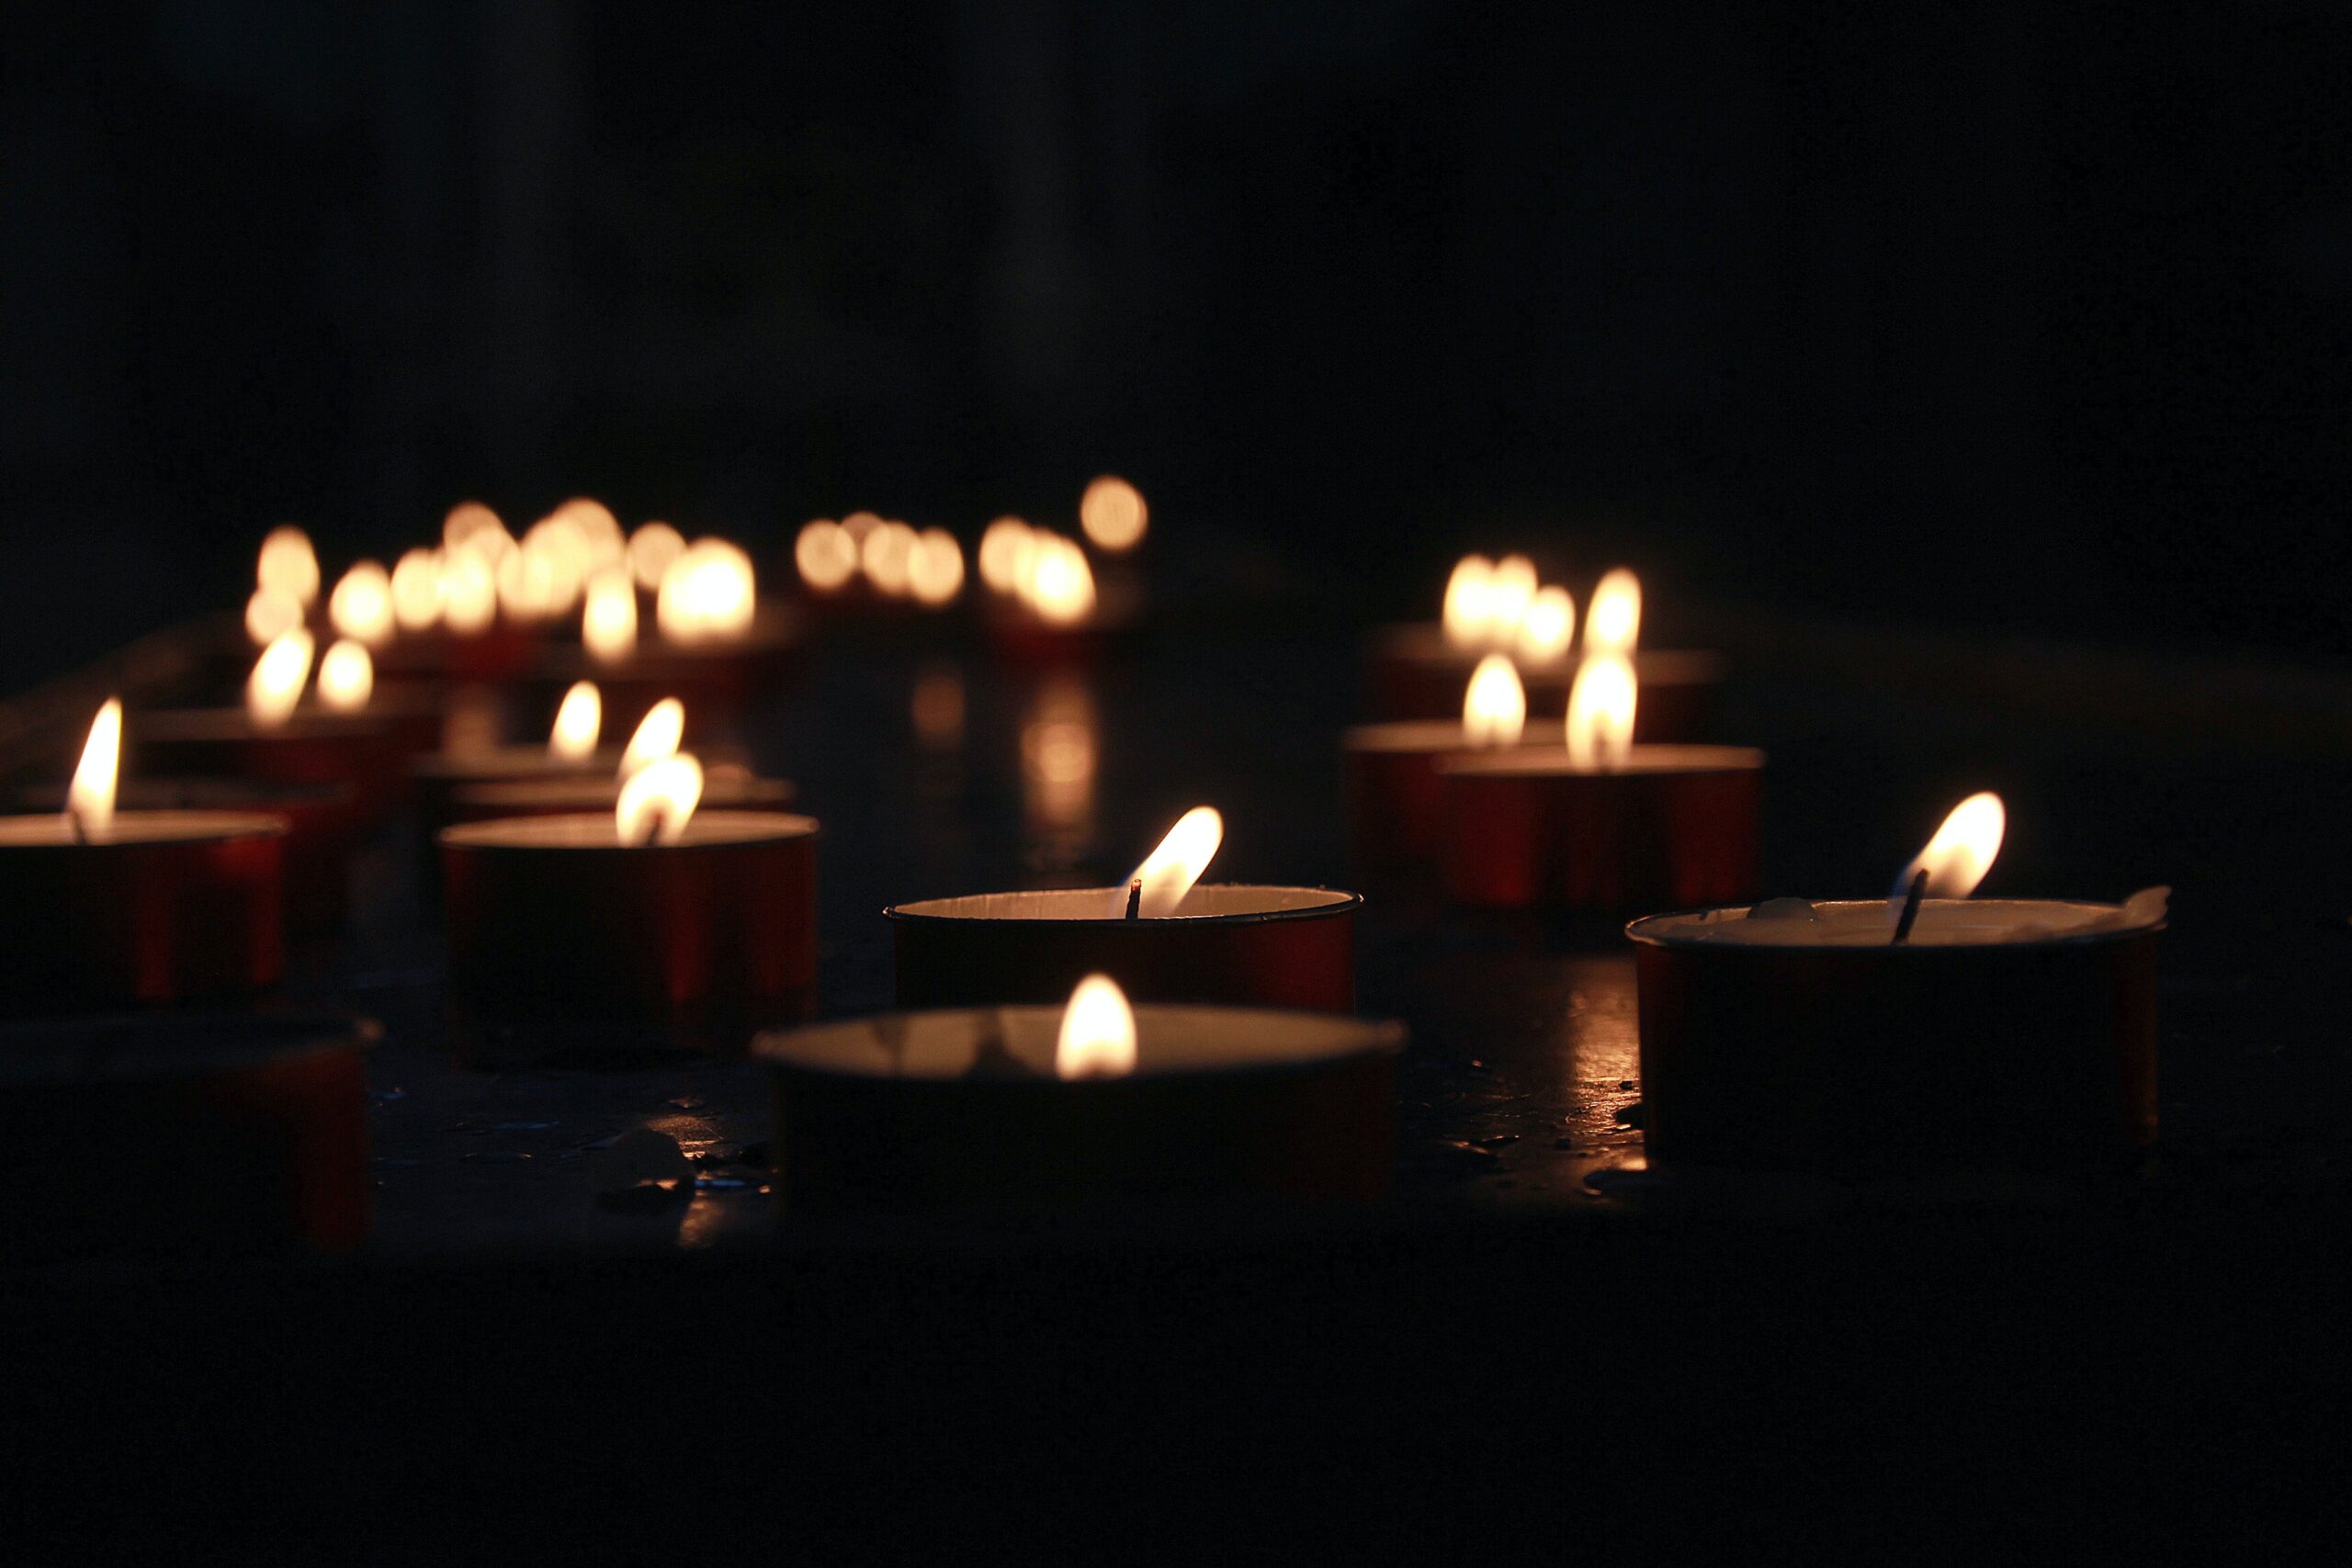 Candles representing prayer